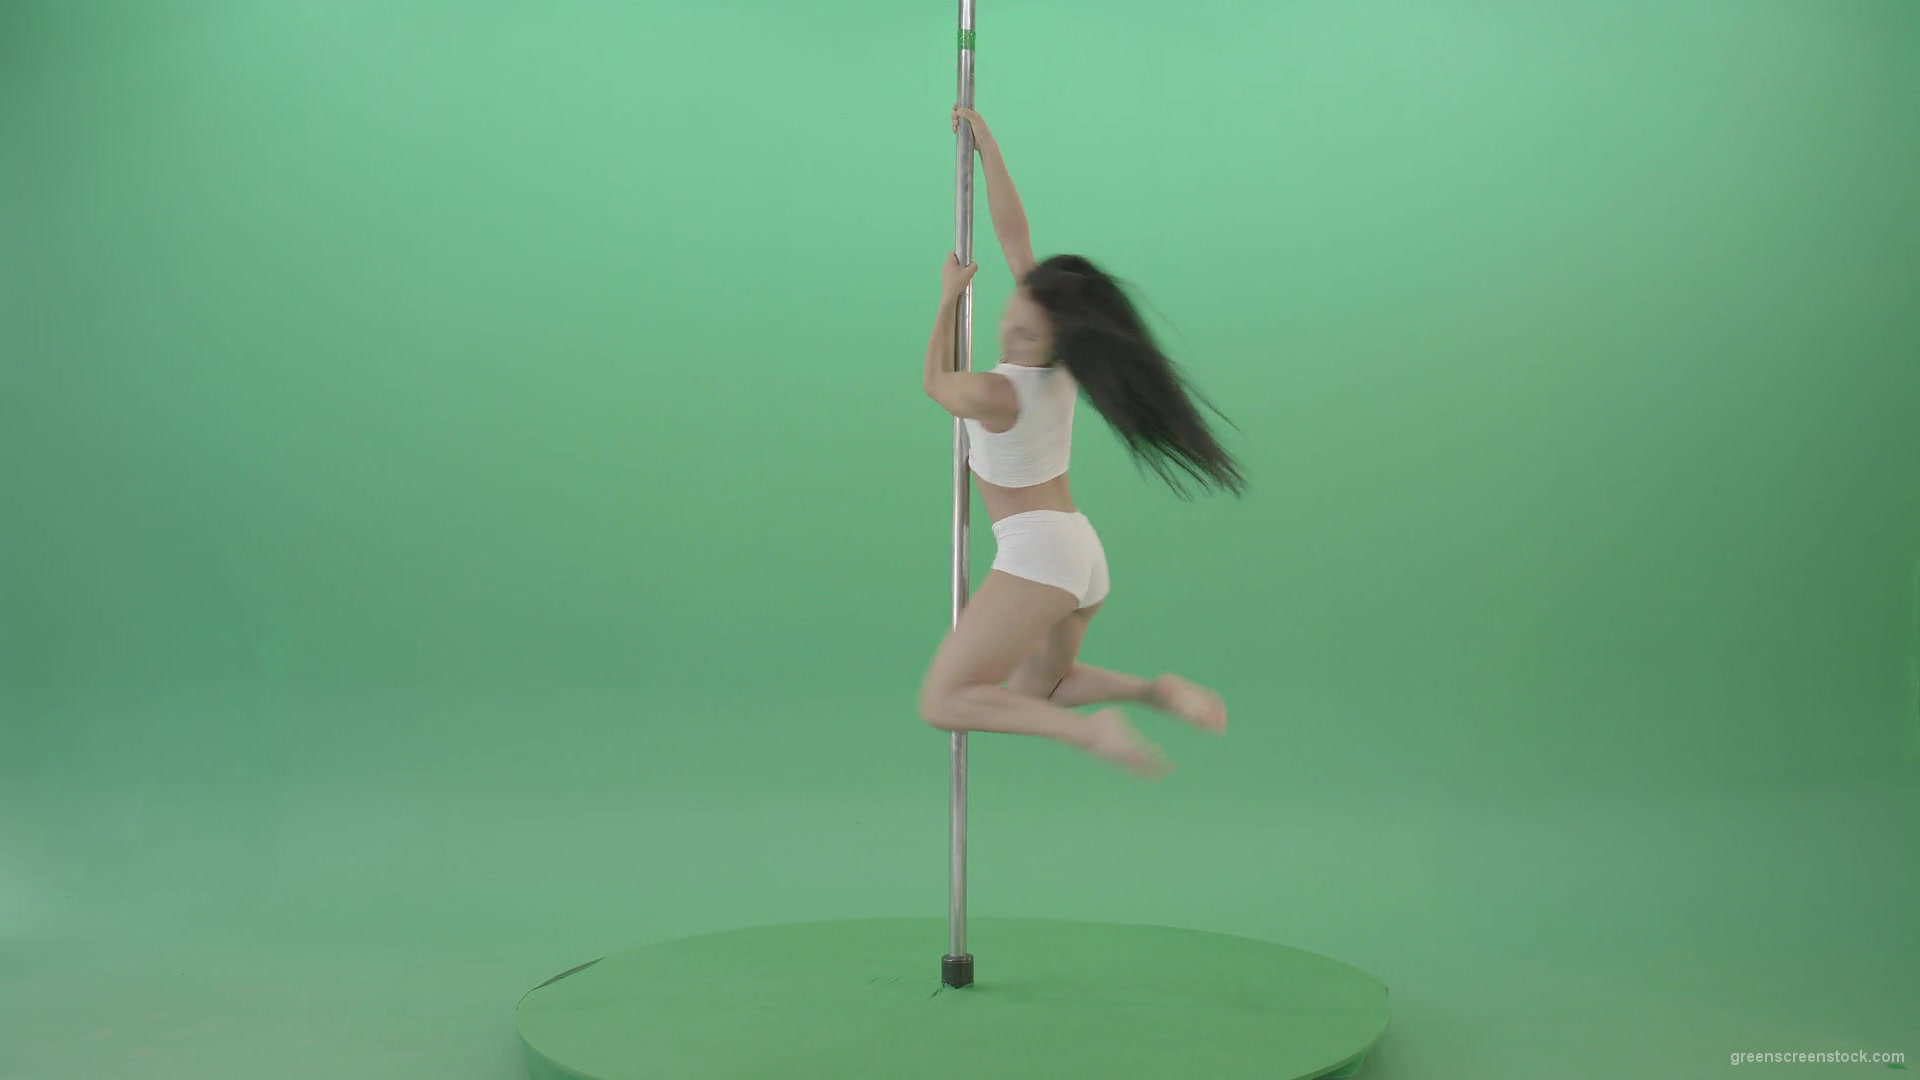 Pole-dance-trainer-girl-has-a-sport-flight-on-green-screen-4K-Video-Footage-1920_006 Green Screen Stock